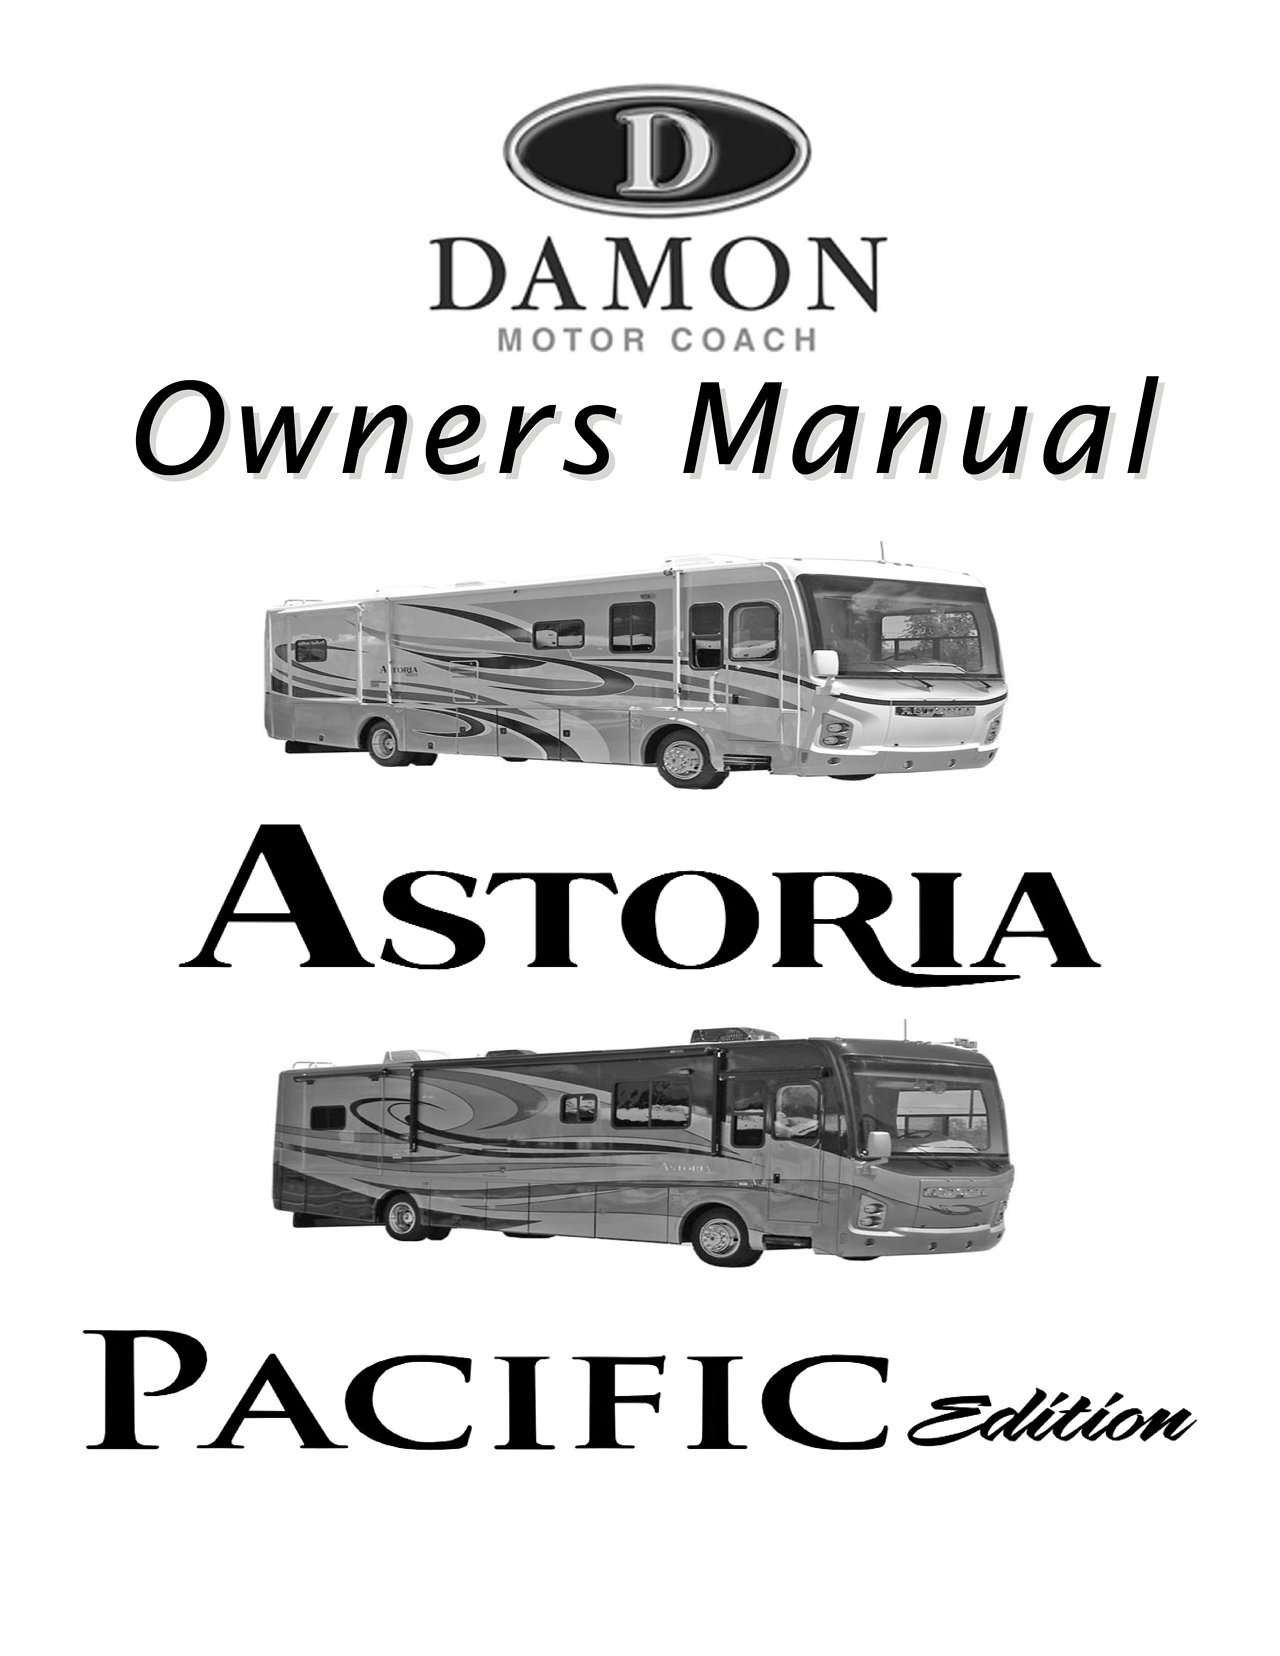 thor travel trailer manuals